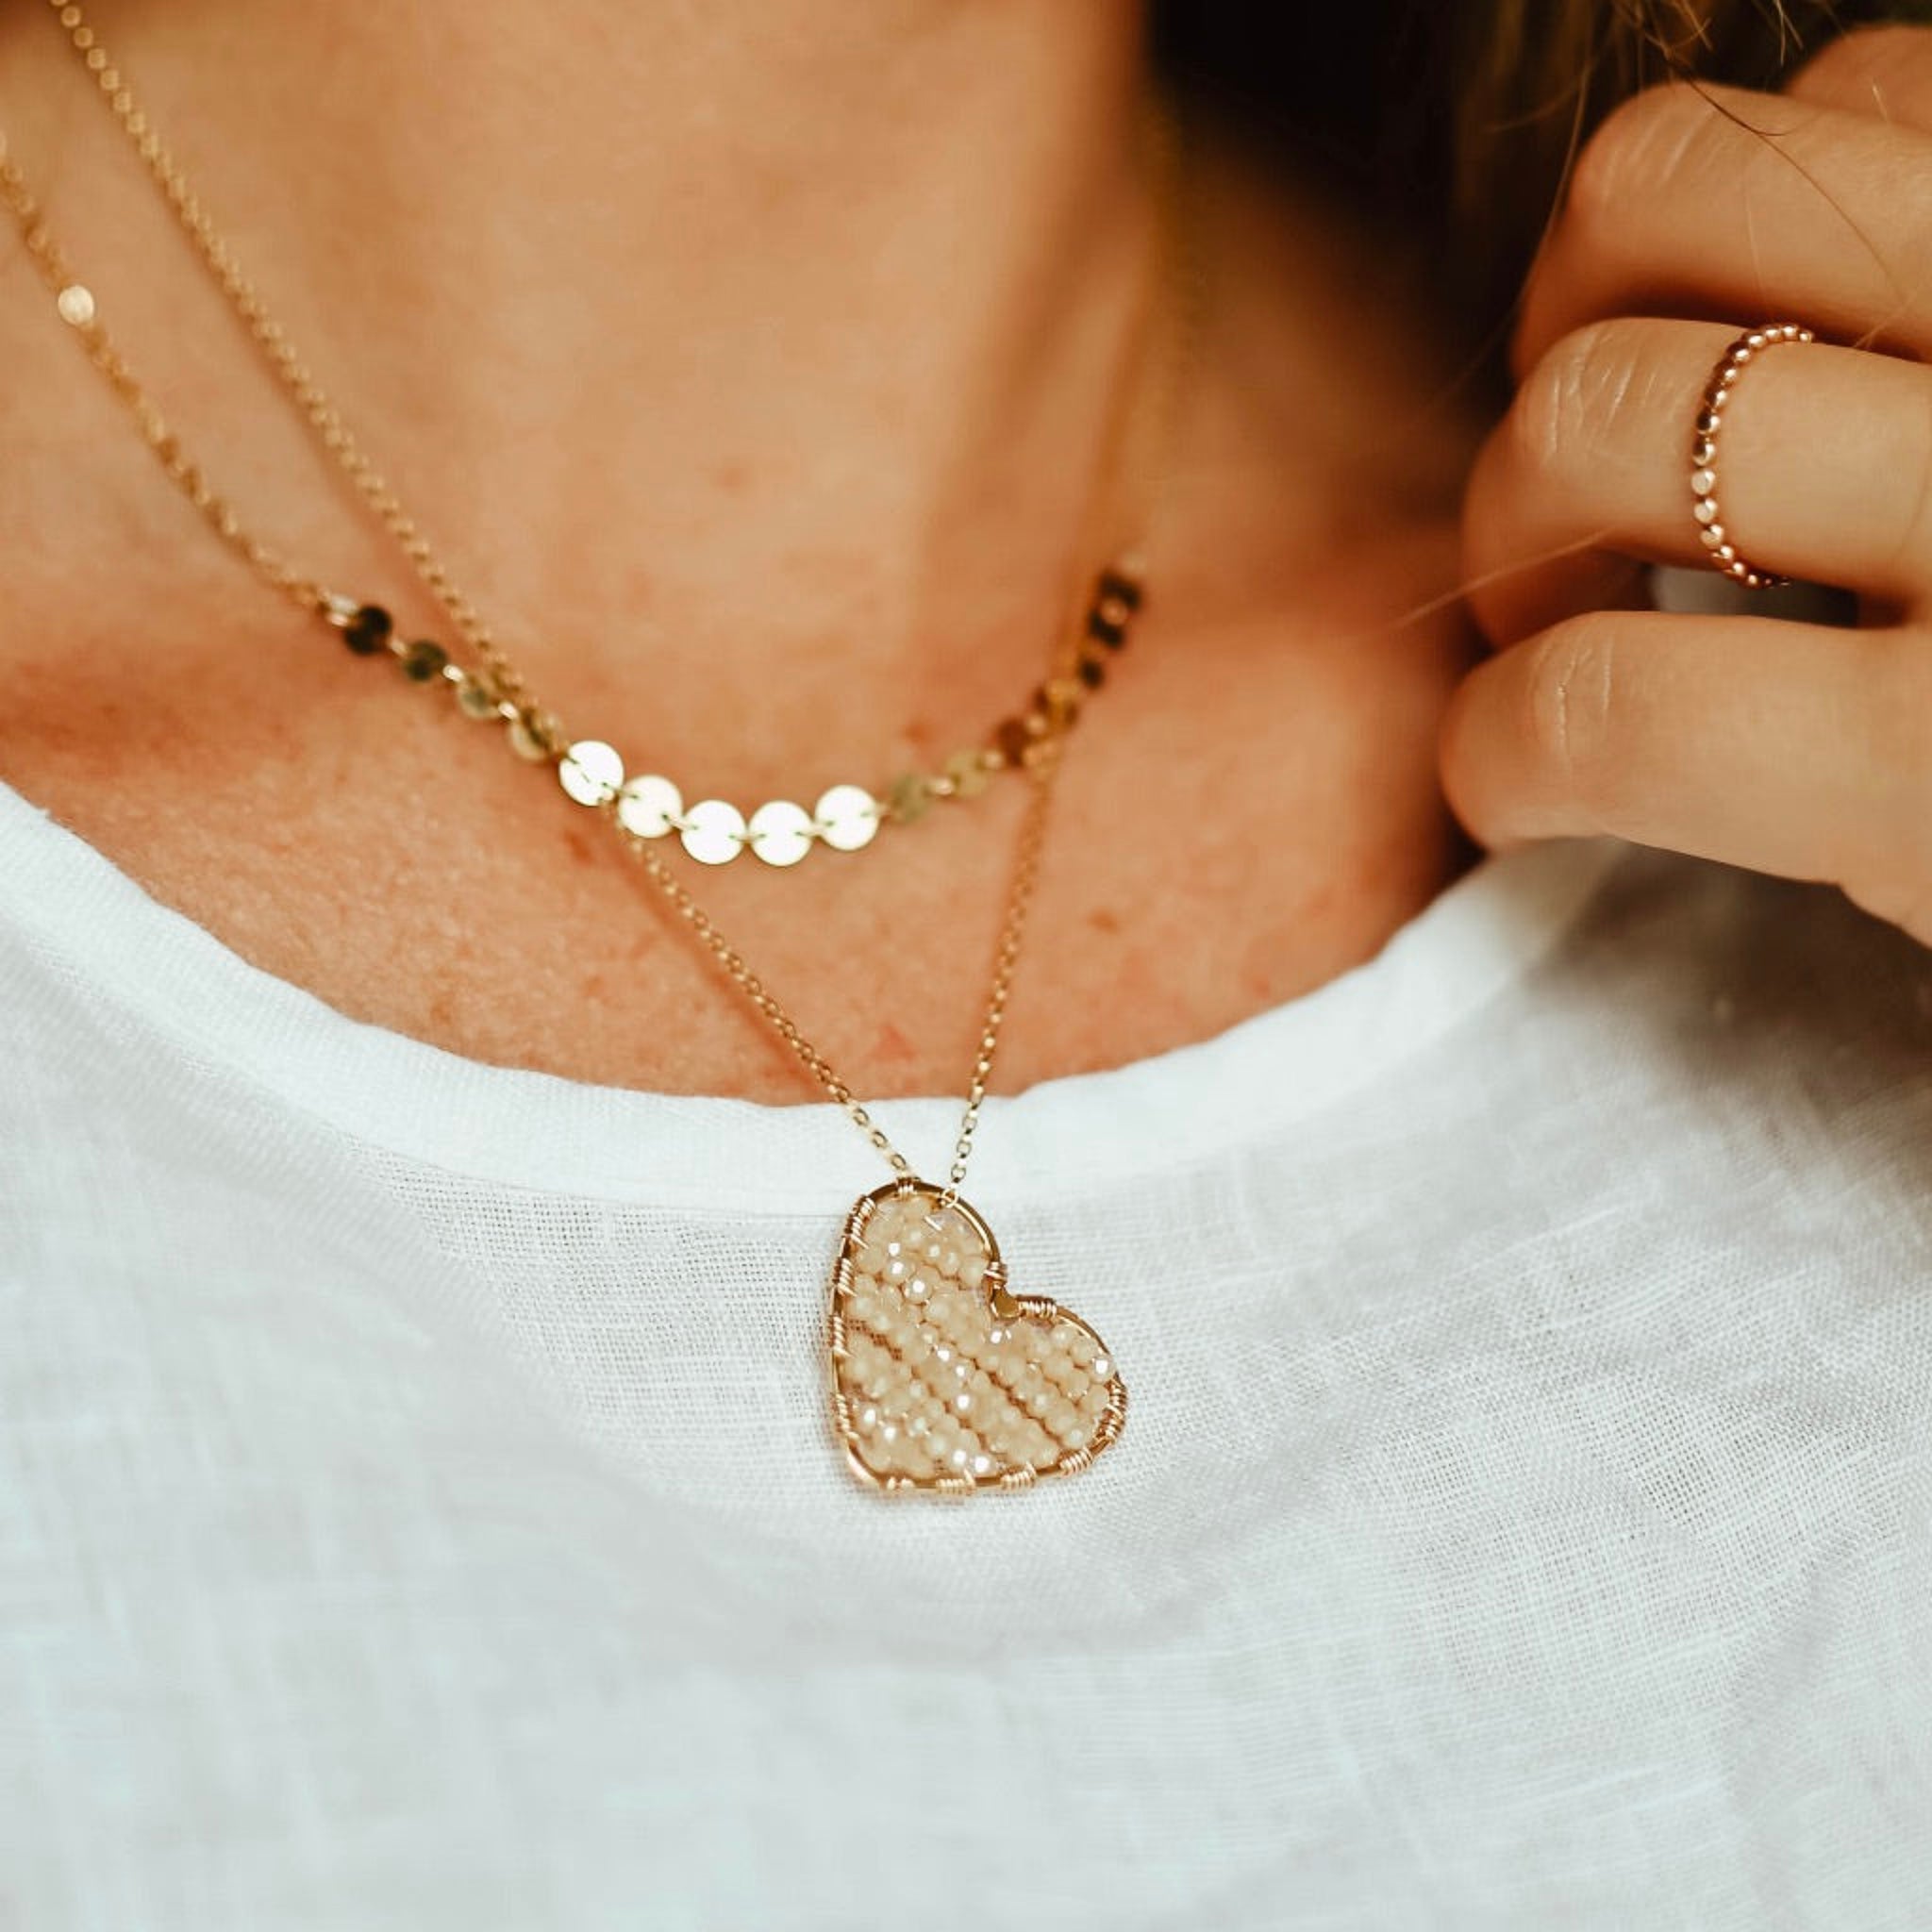 Honey Love Drop Necklace, shown on model